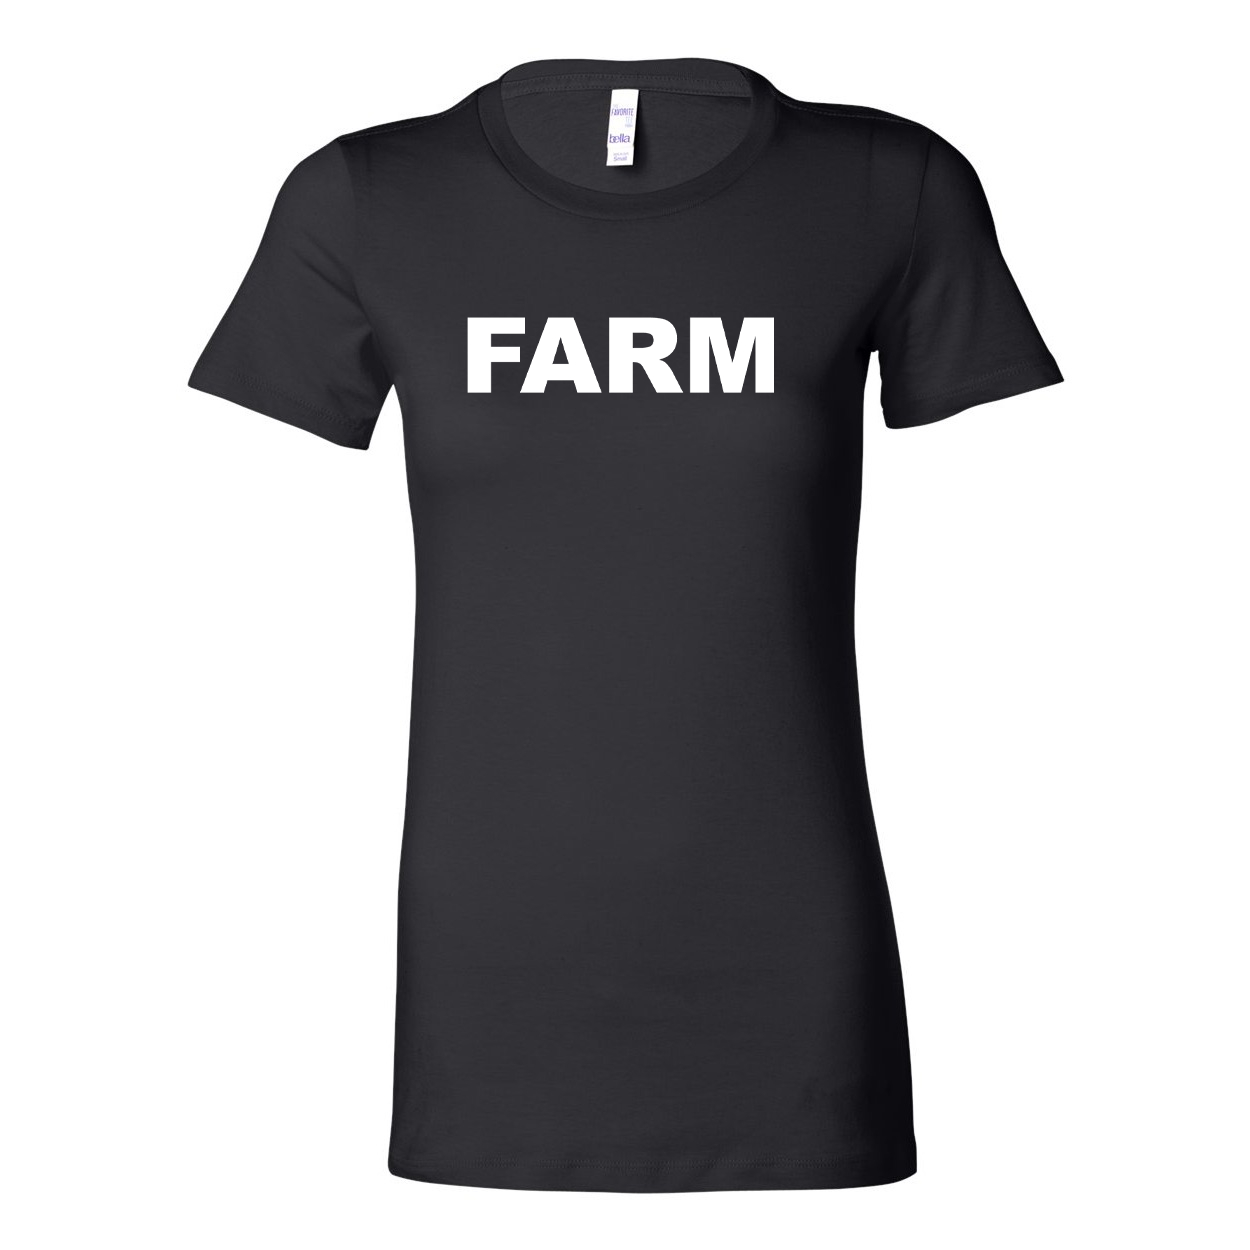 Farm Brand Logo Classic Women's Fitted Tri-Blend T-Shirt Black (White Logo)